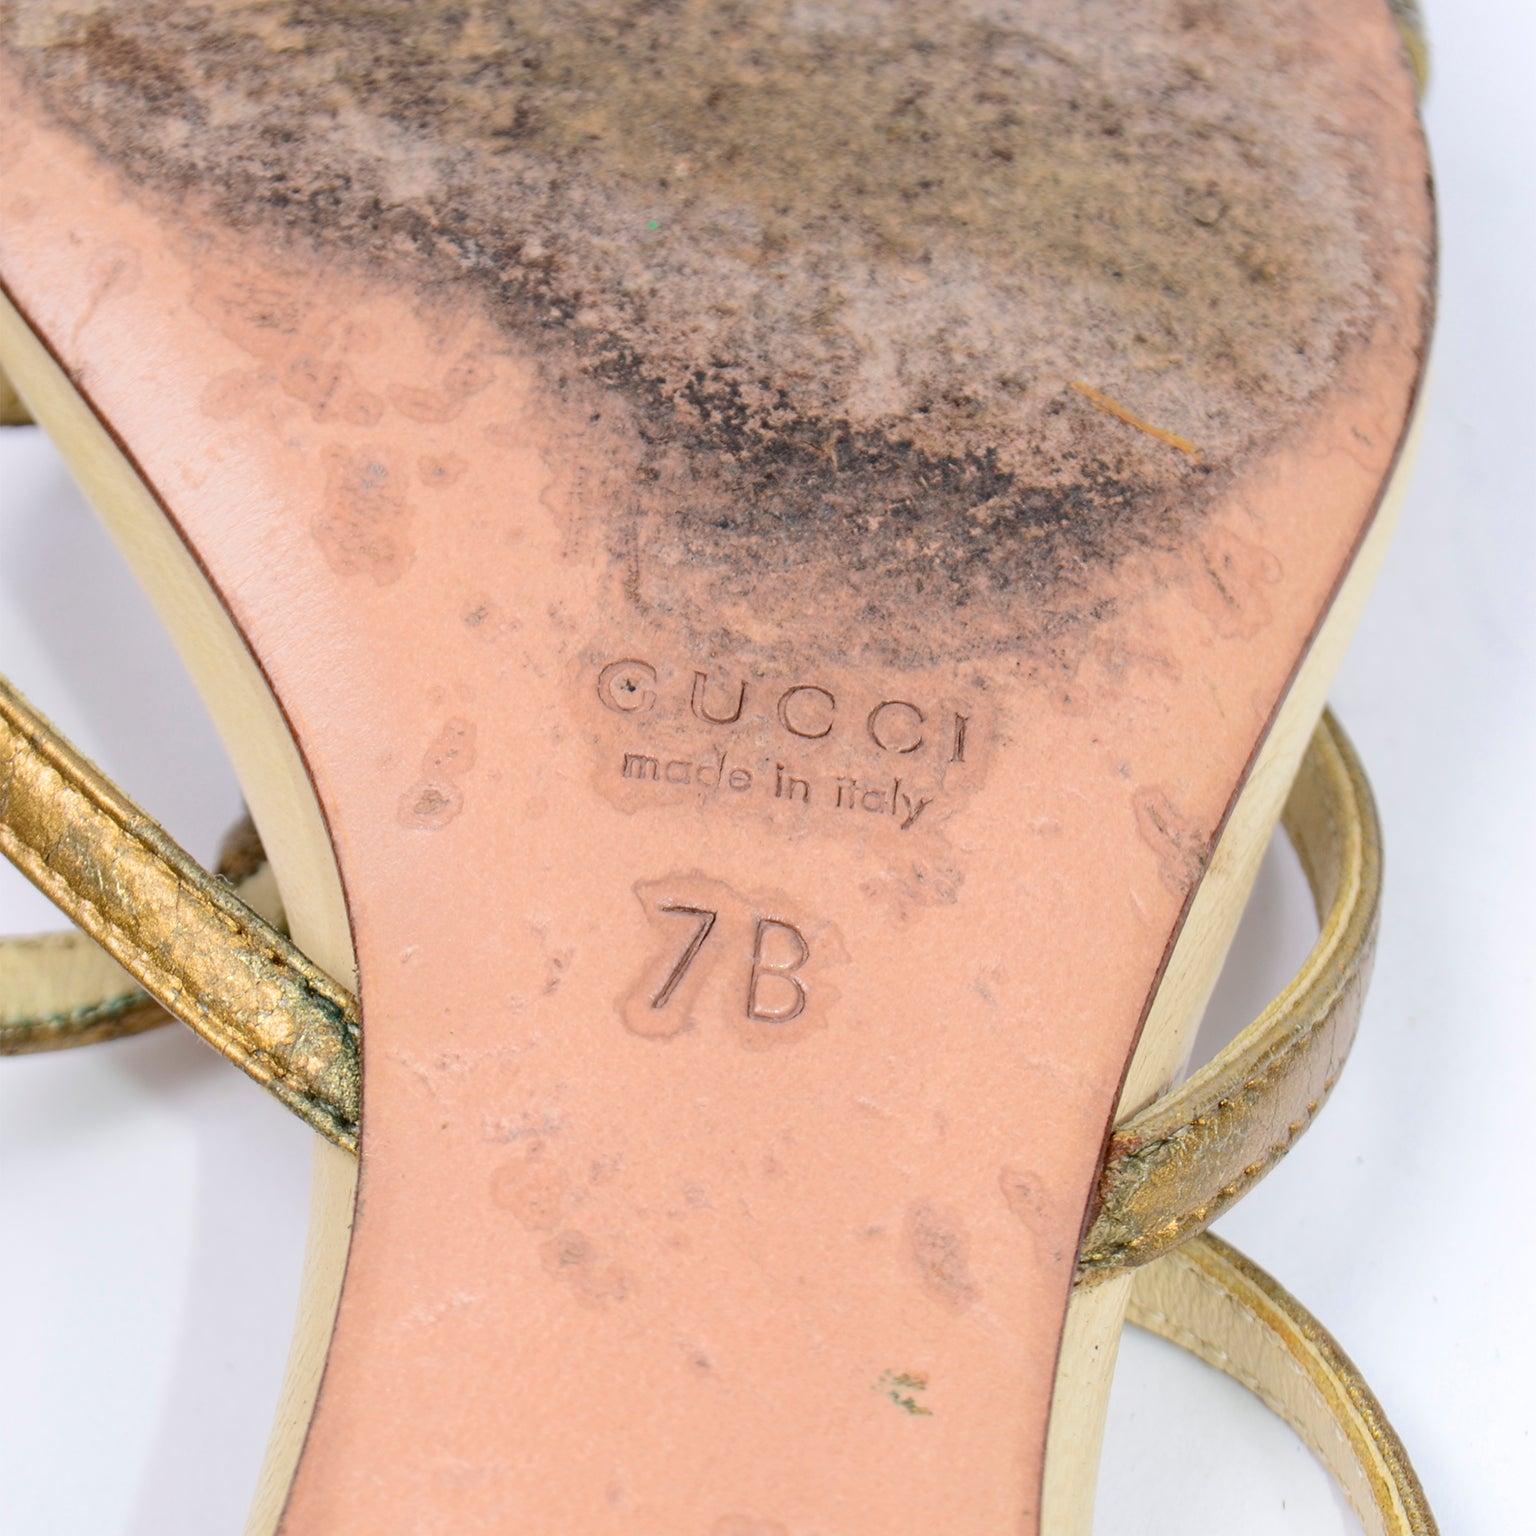 Vintage Gucci Shoes Gold Leather Sandals Size 7b